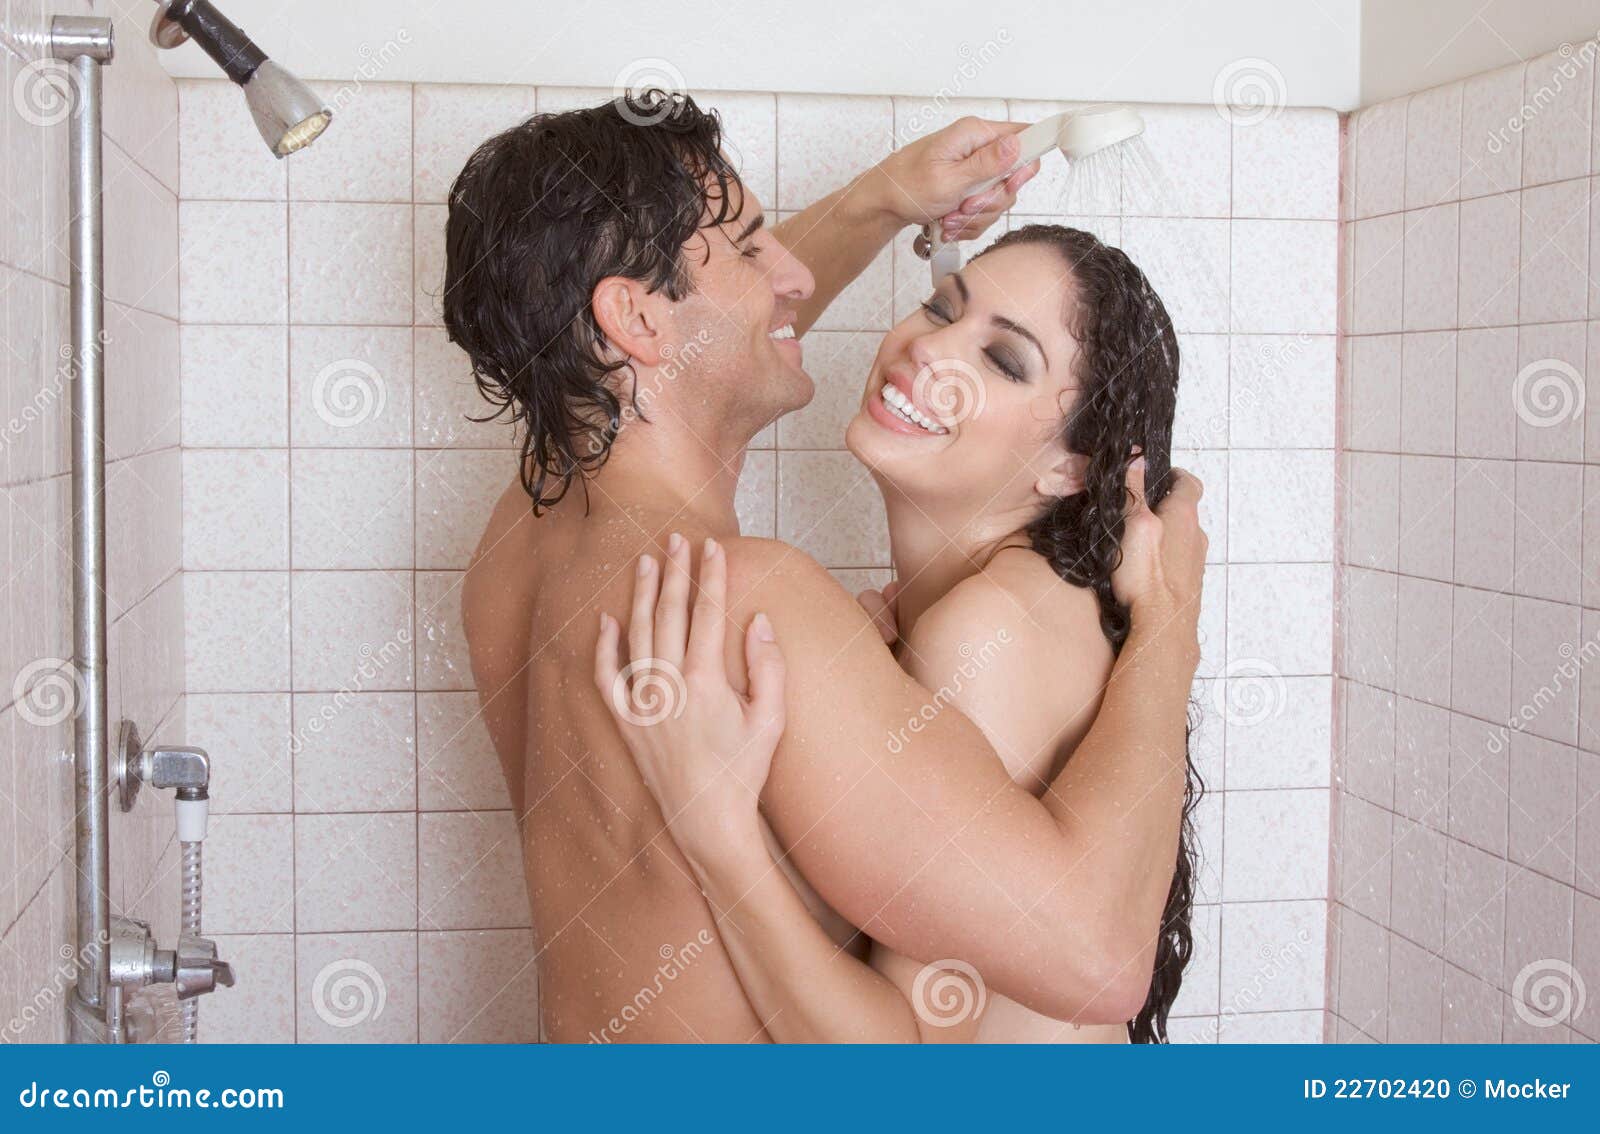 Nackte männer dusche